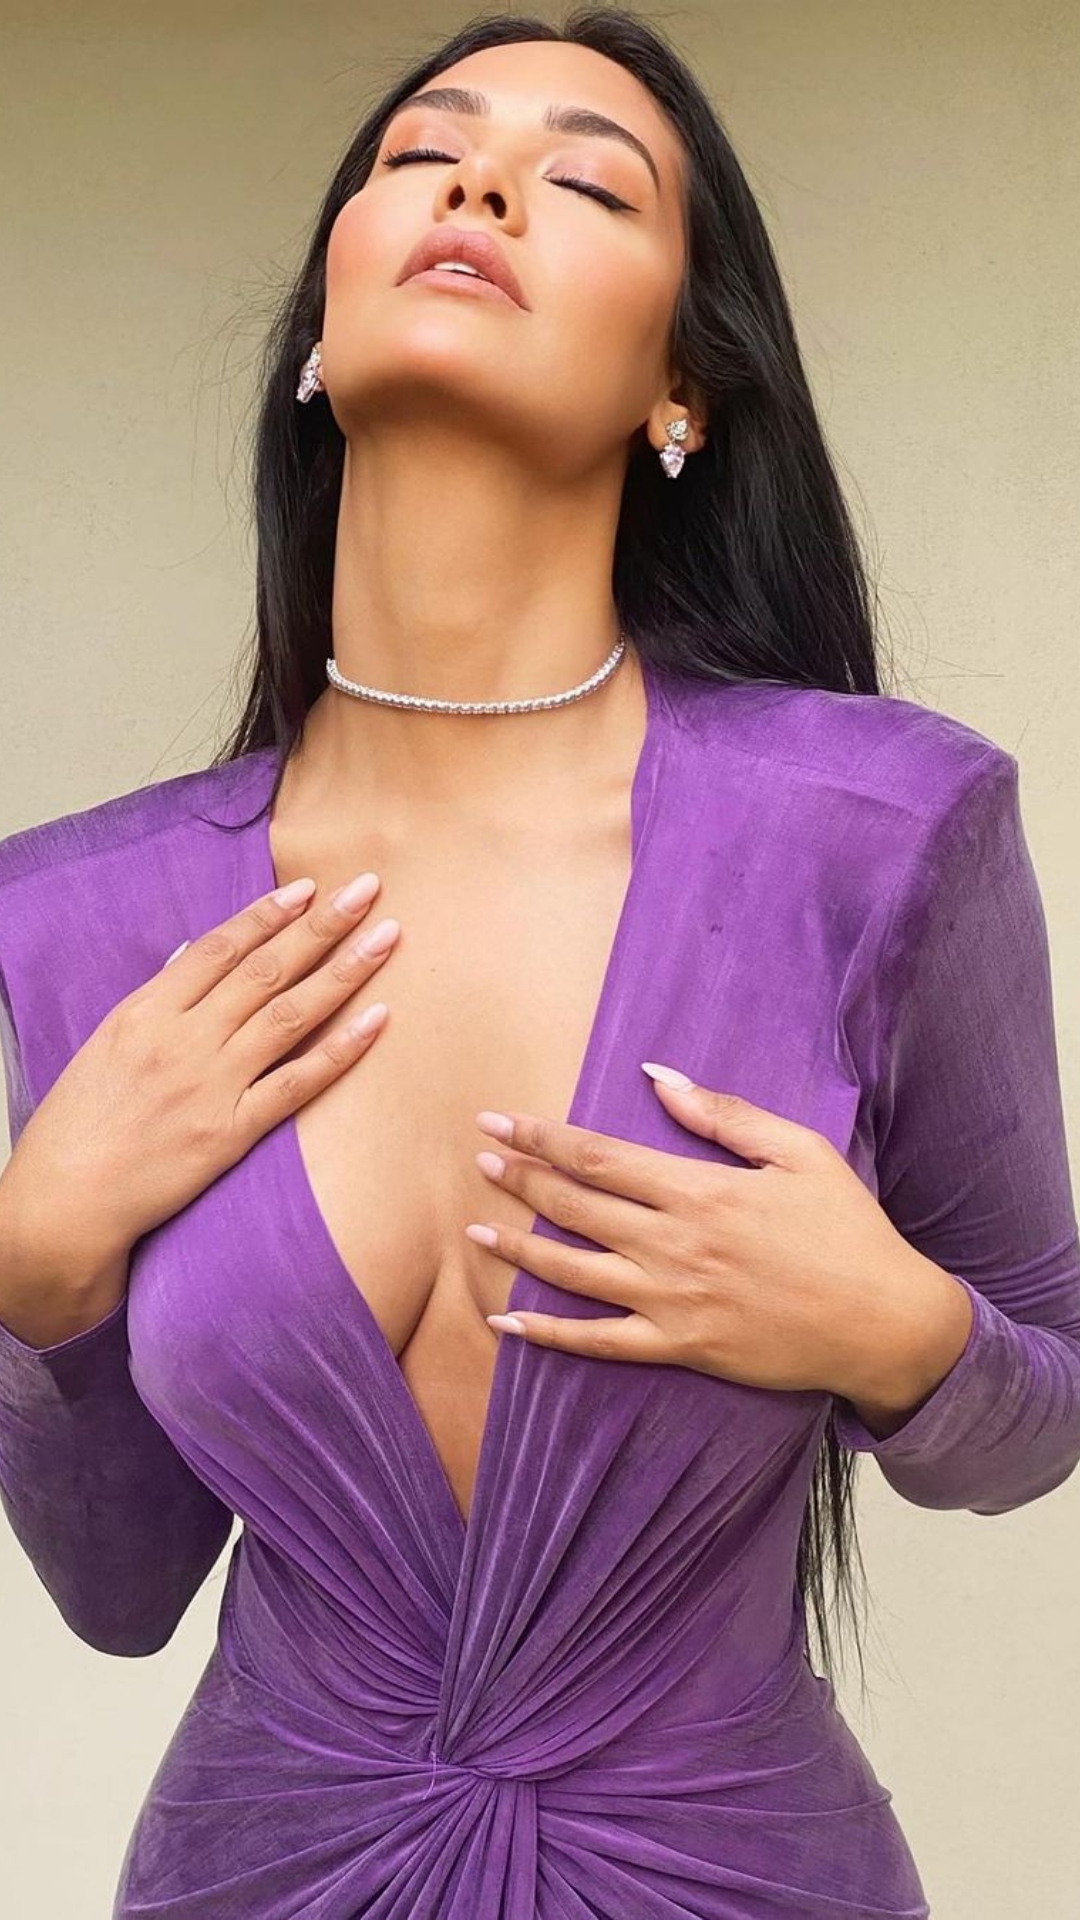 Esha Gupta's viral plunging neckline photos in thigh-high slit outfits.